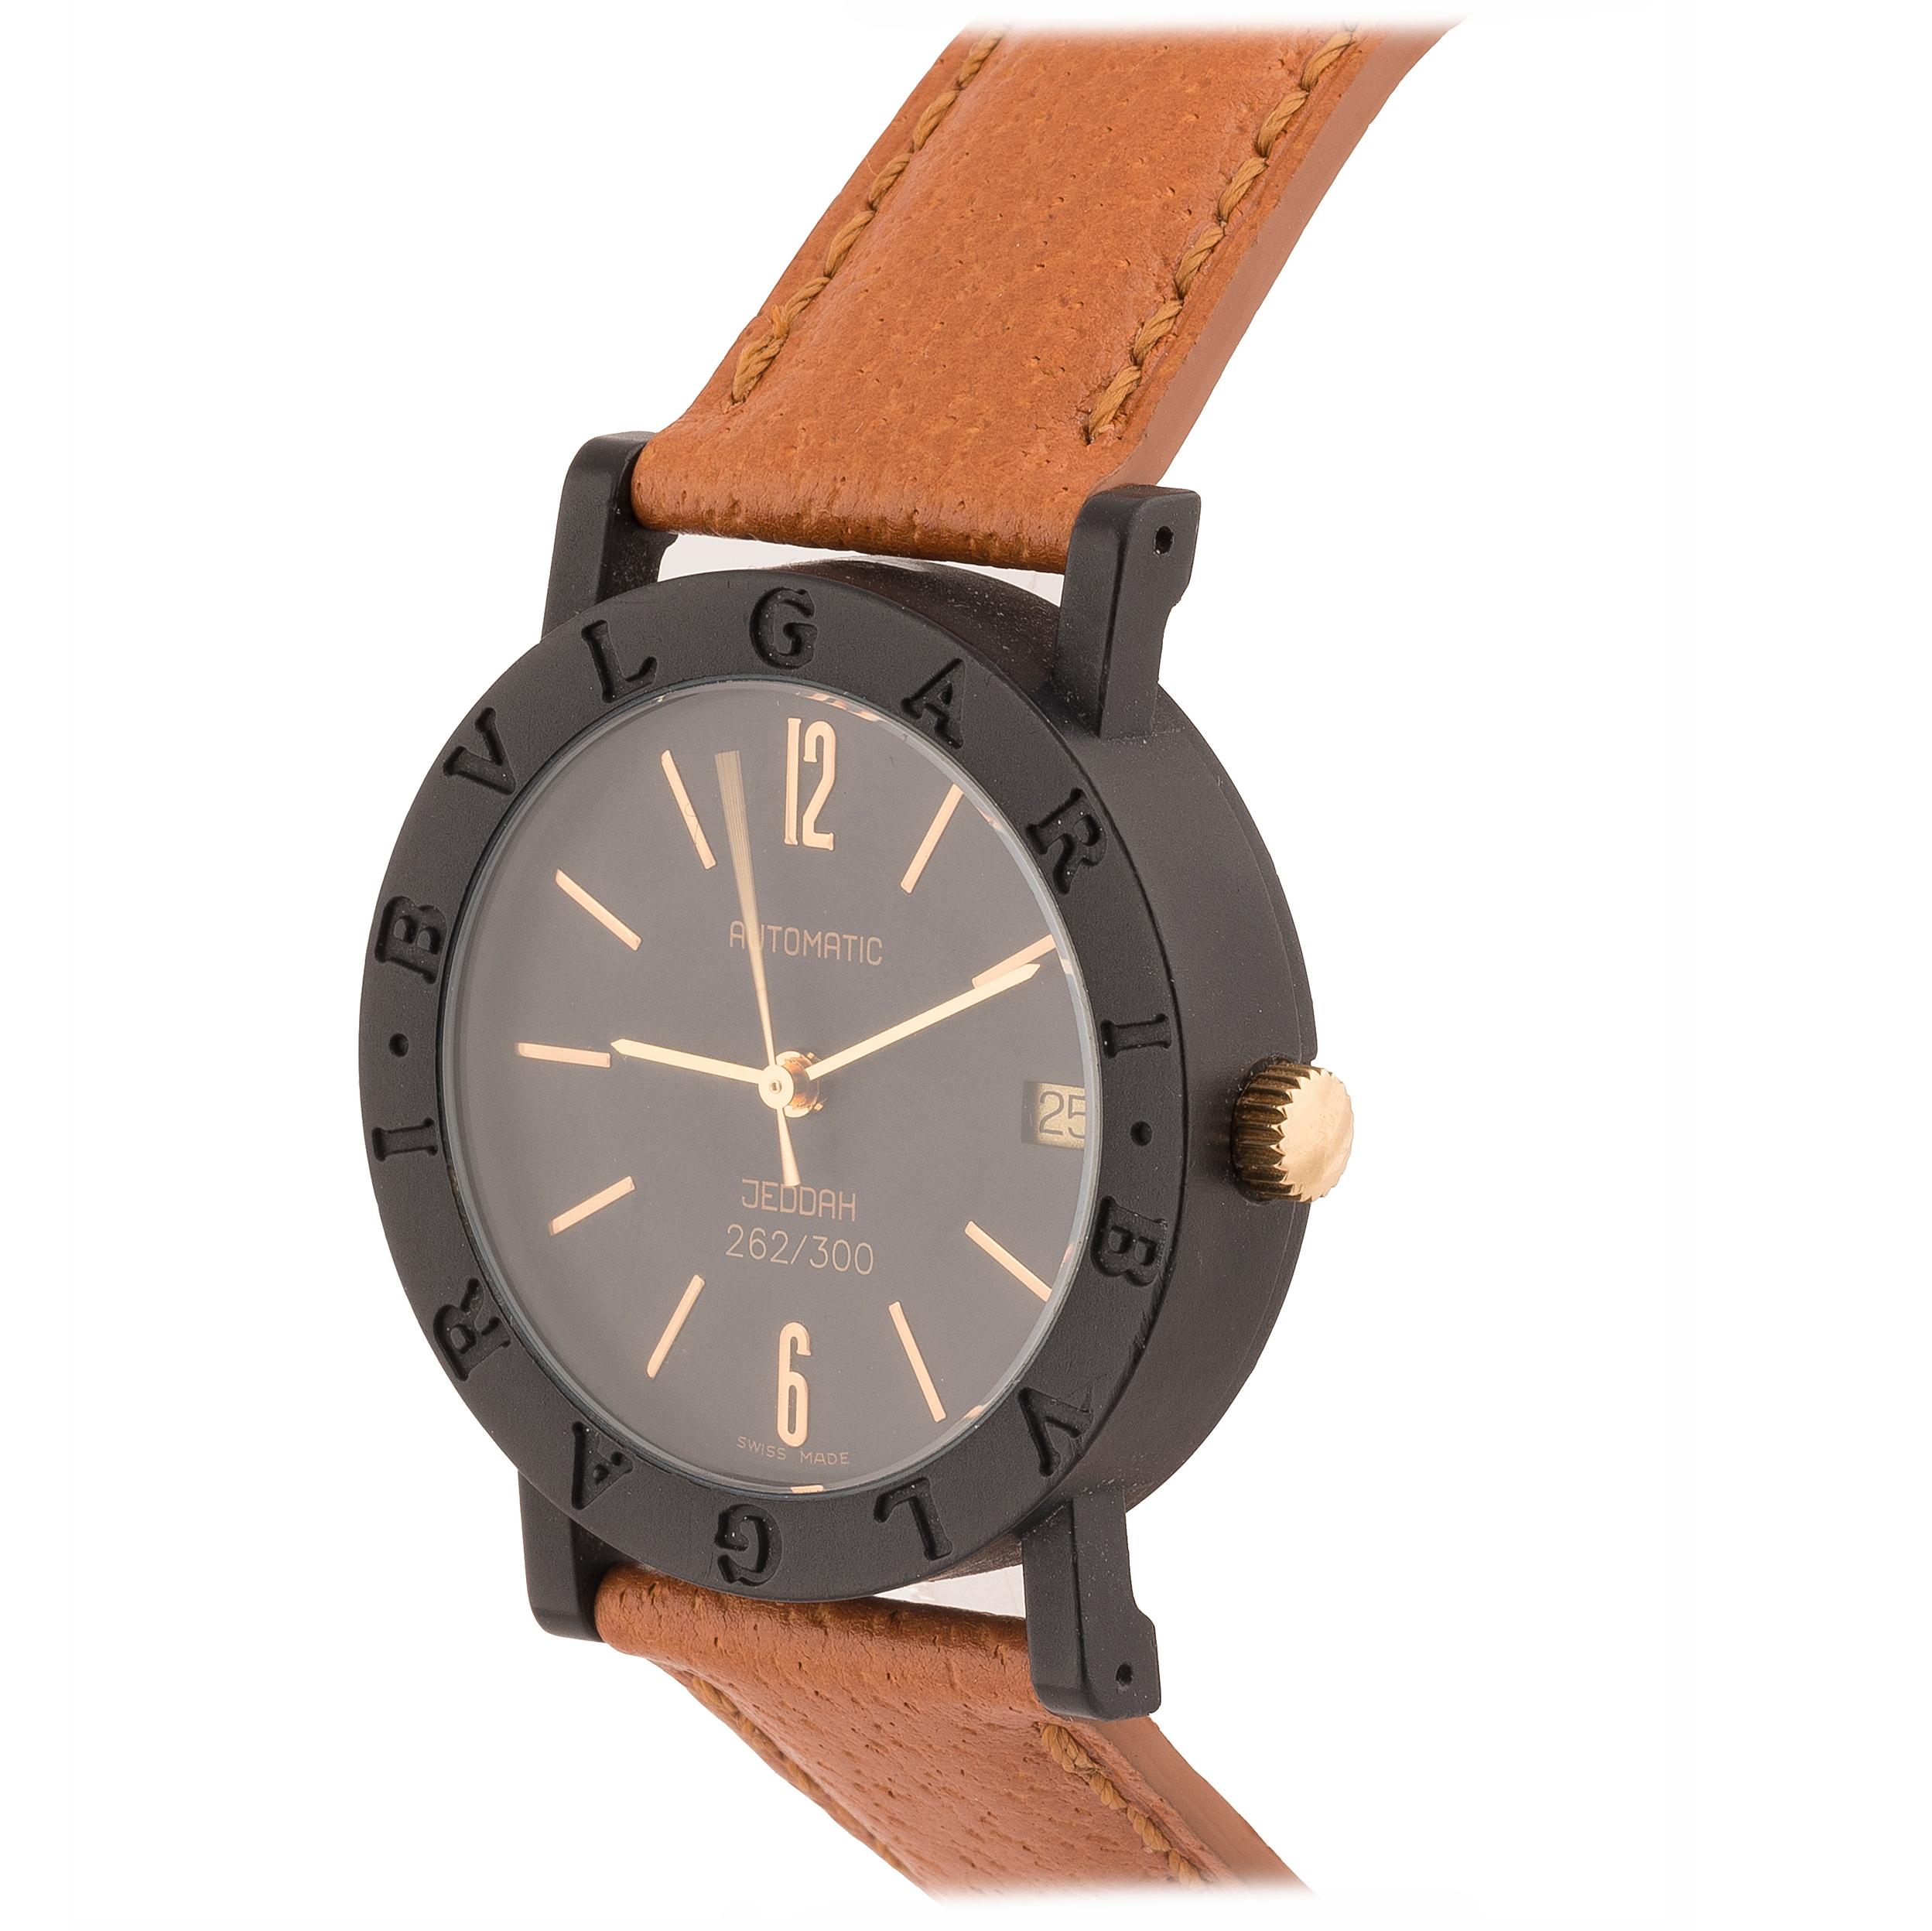 Bulgari Limited Edition Mid-Size Jeddah Wrist Watch